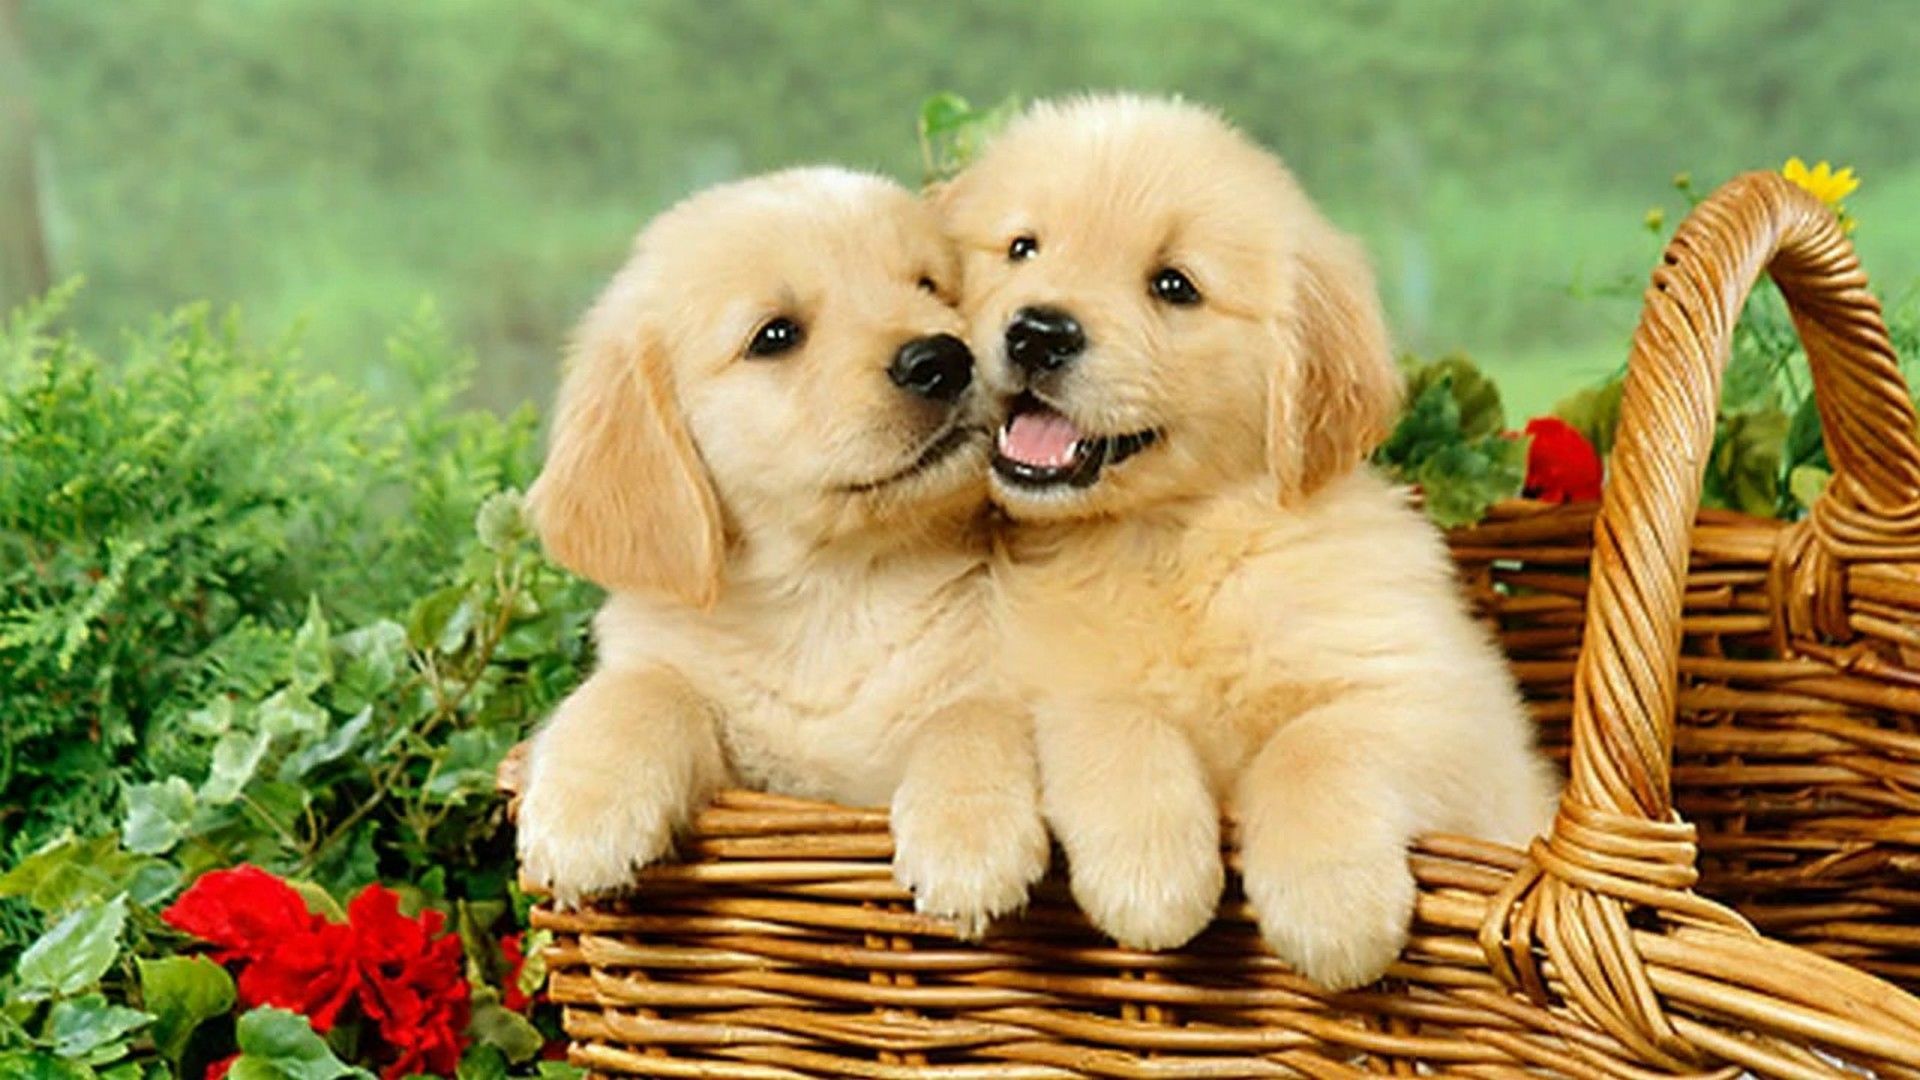 Cute Desktop Puppies Cute Desktop Dog Backgrounds - All About Cwe3